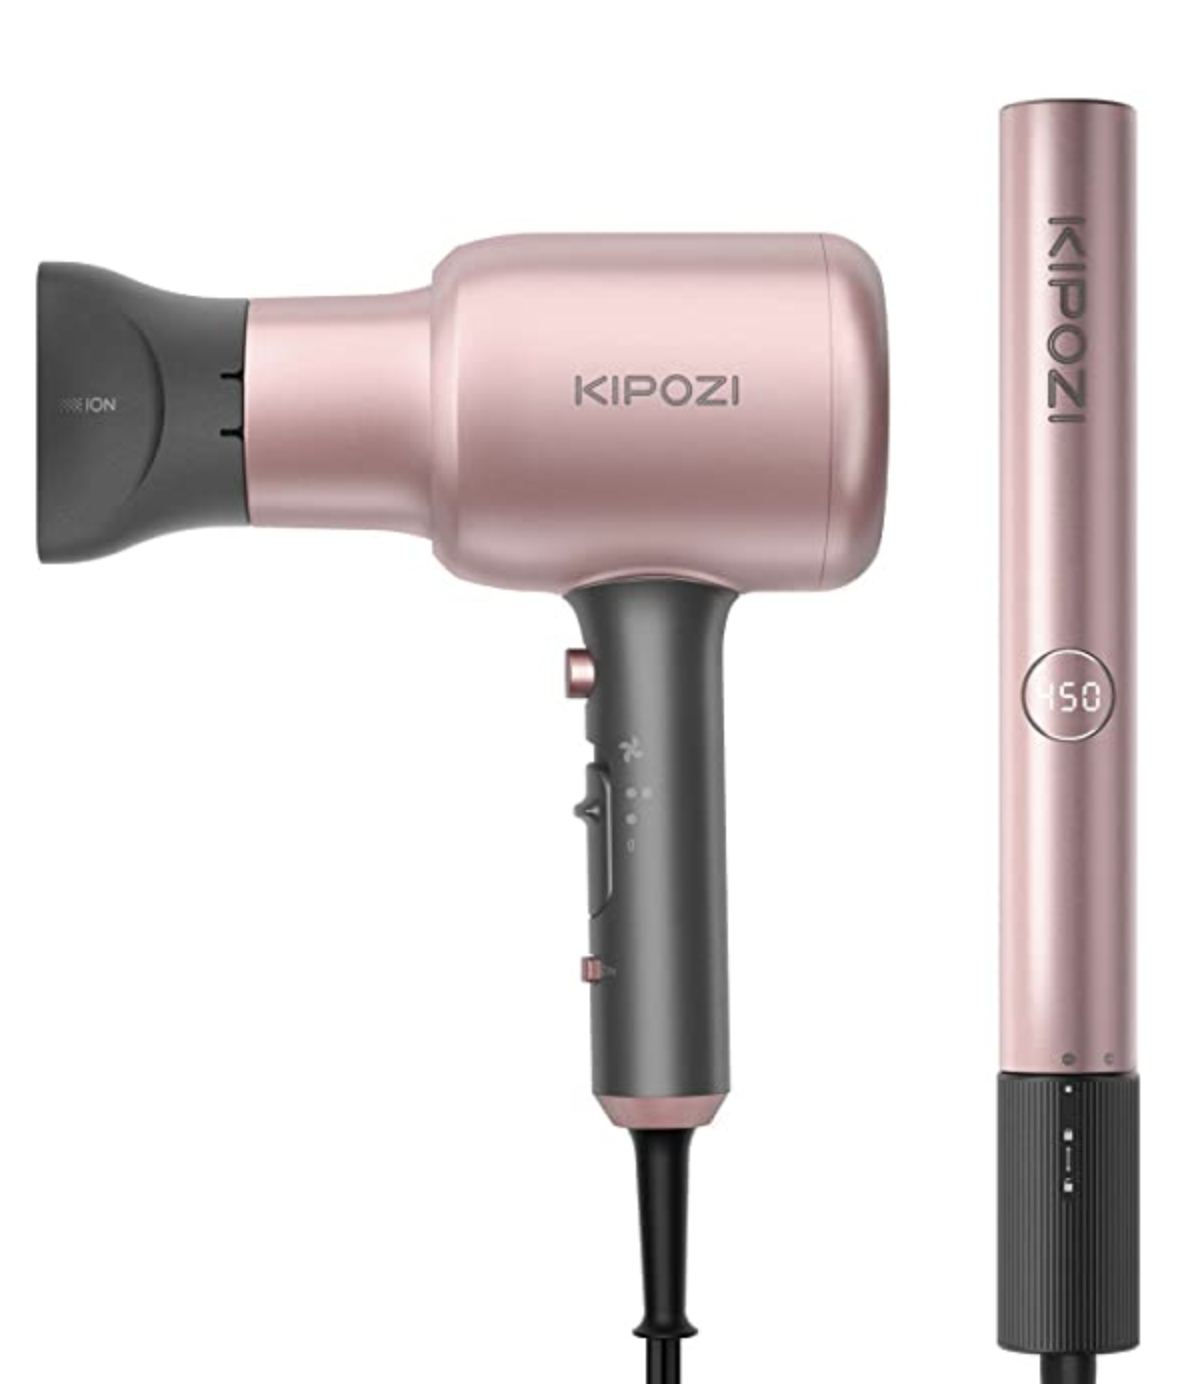 KIPOZI Hair Dryer and Hair Straightener Set $41.90 + Free Shipping w/ Prime